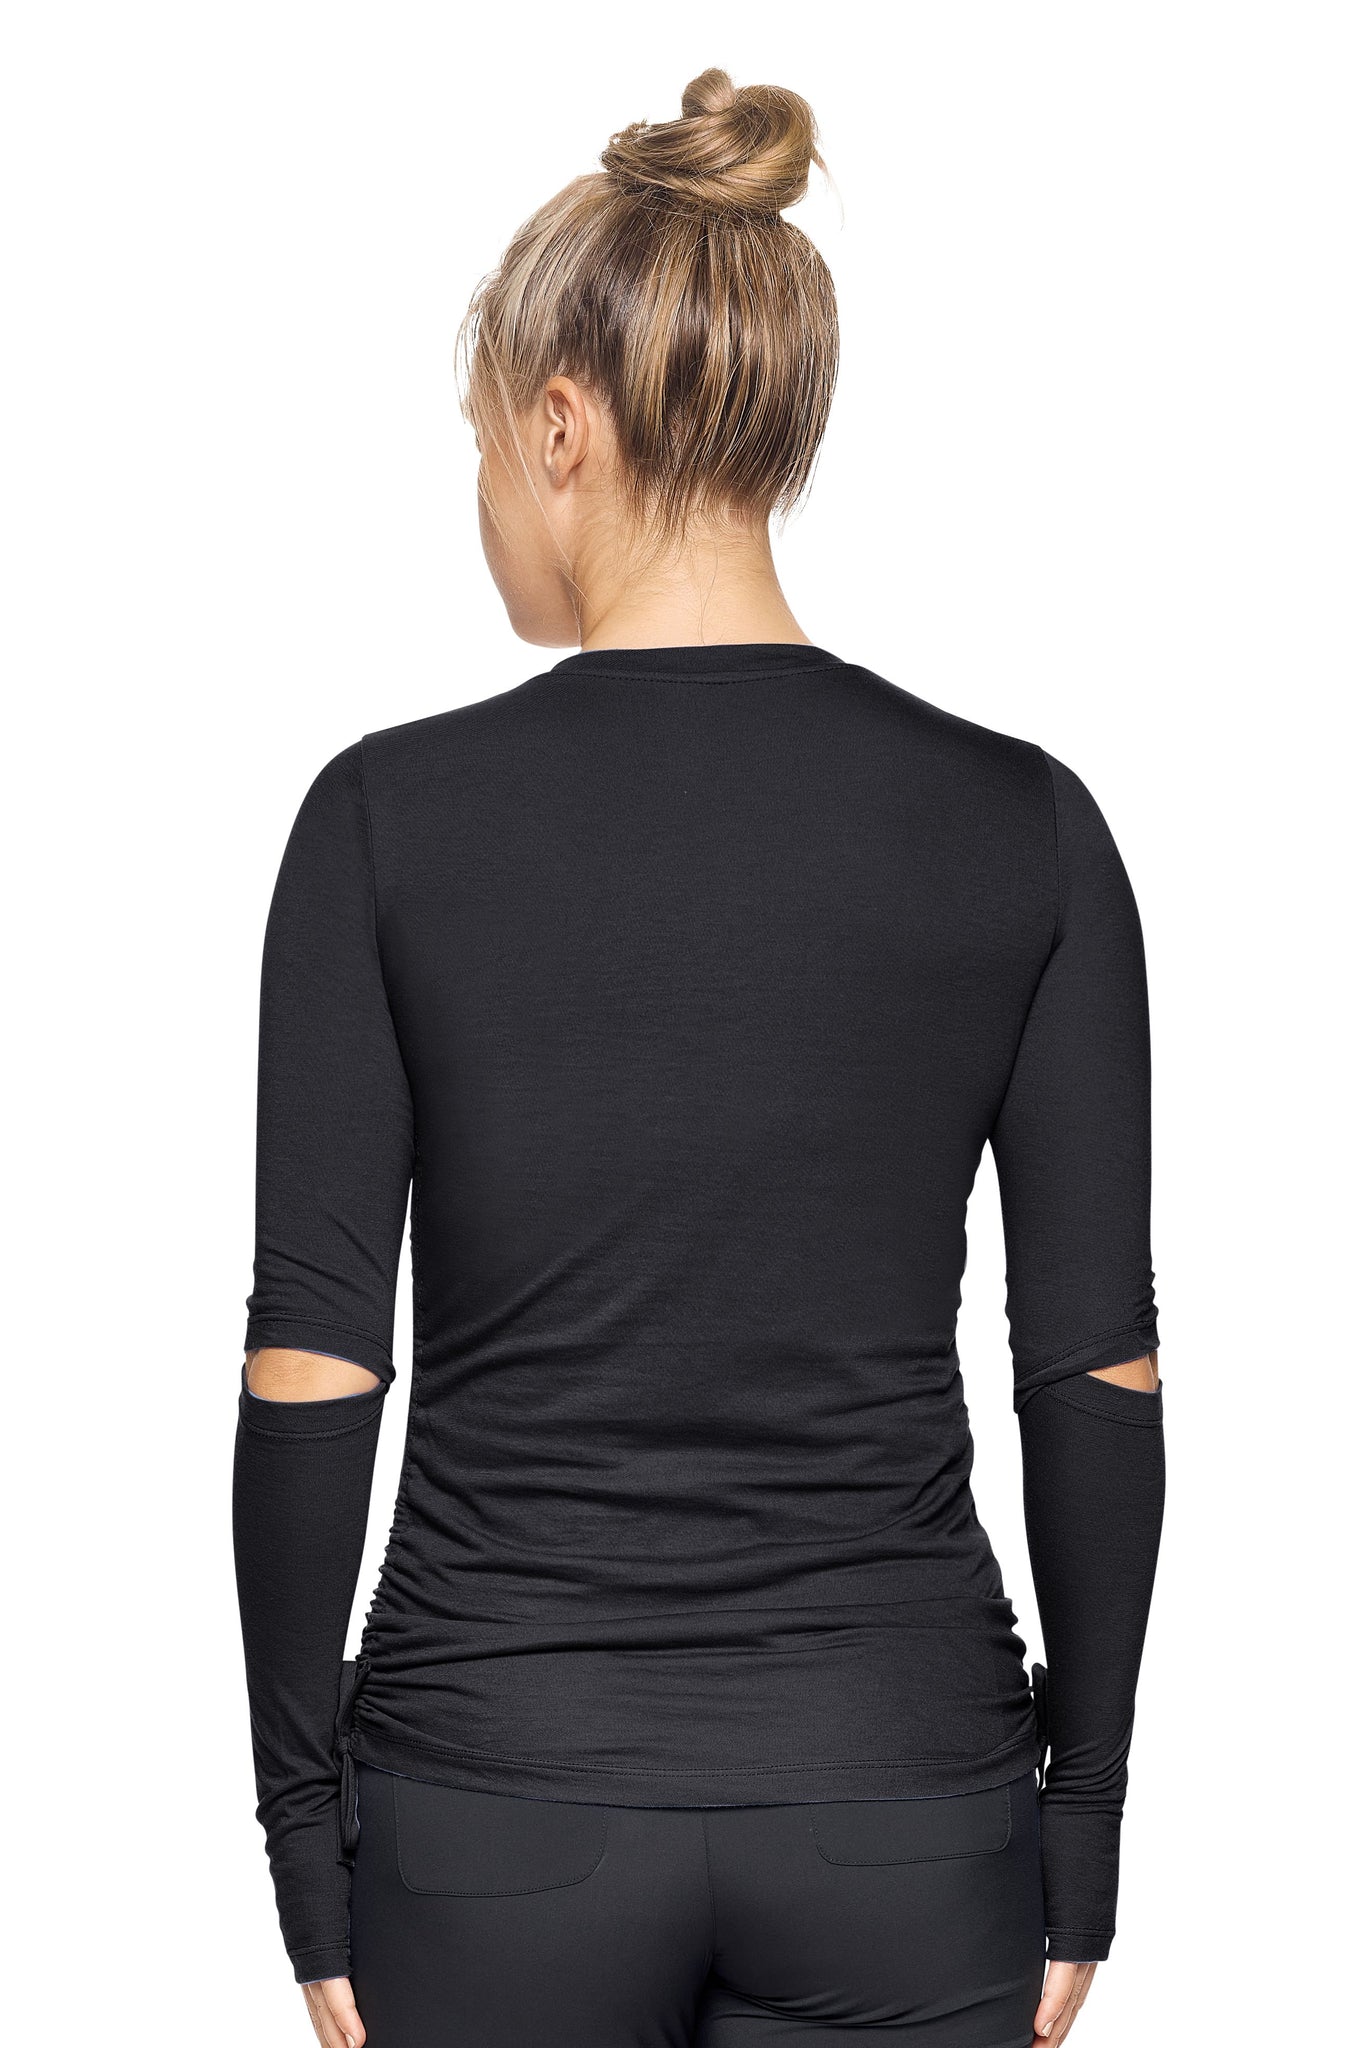 MC348🇺🇸🍃 MoCA™ Laurel Long Sleeve V-Neck - Expert Brand#black